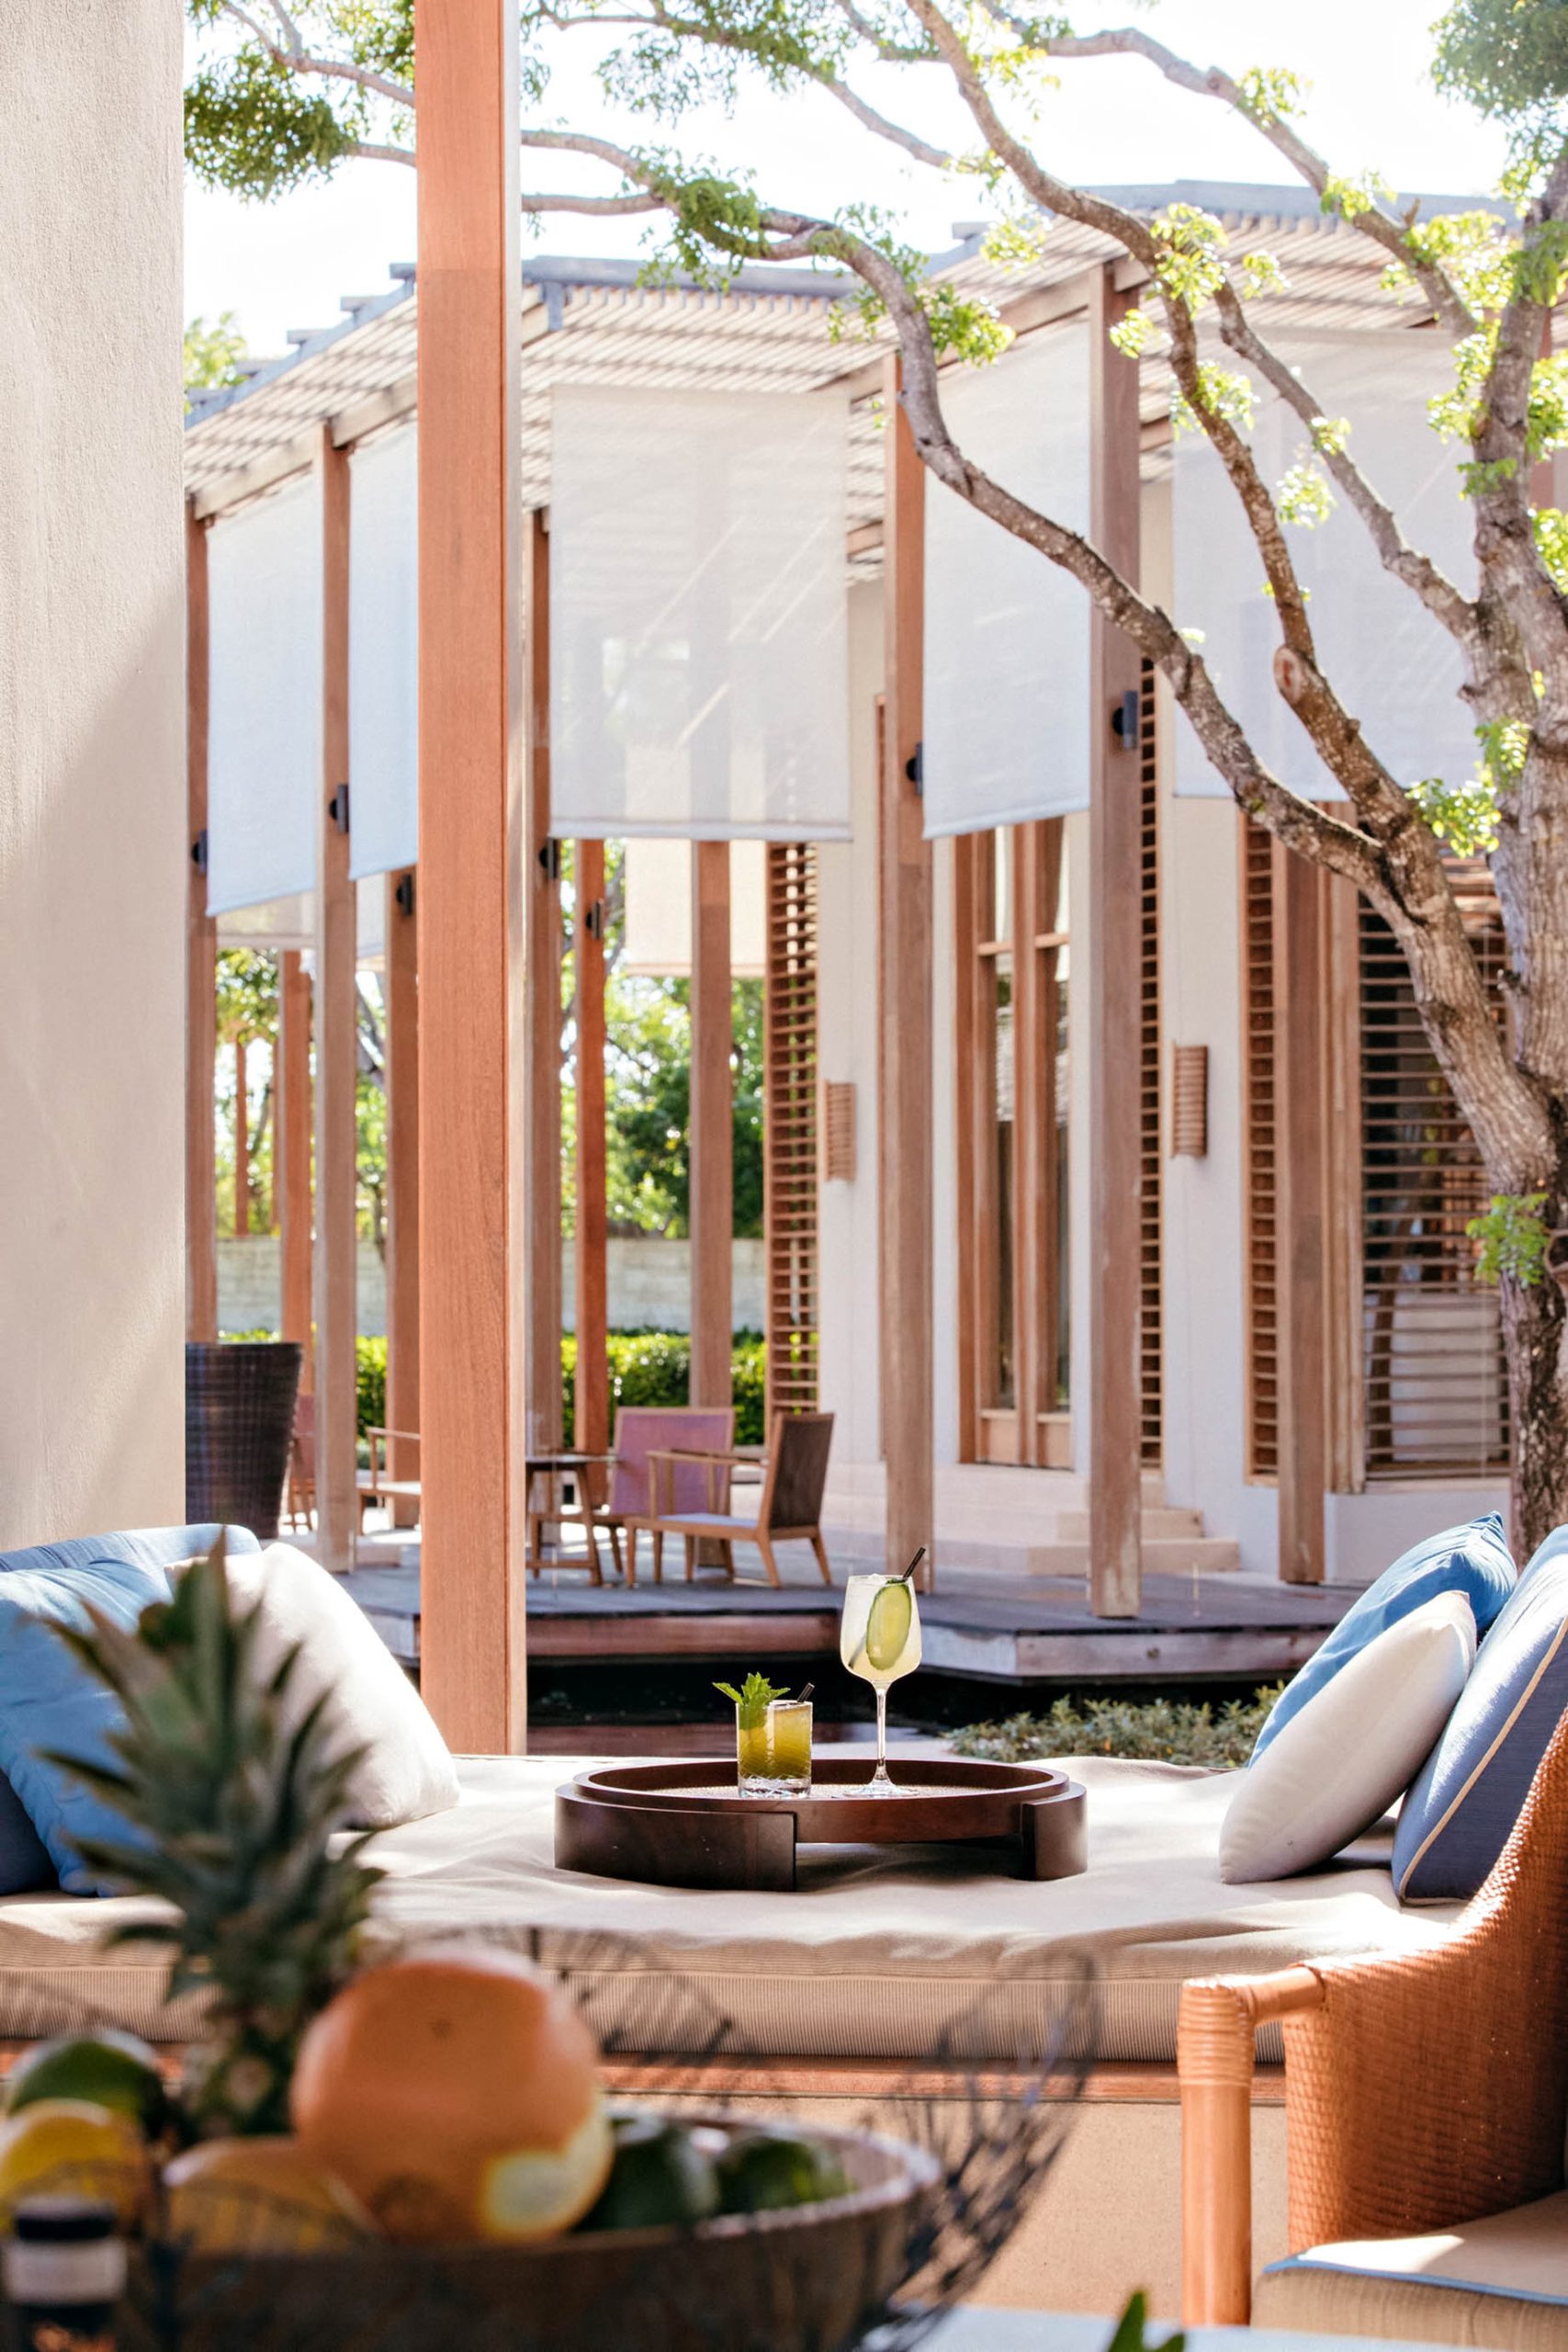 Amanyara Resort – Providenciales, Turks and Caicos Islands – Tranquil Elegant Setting